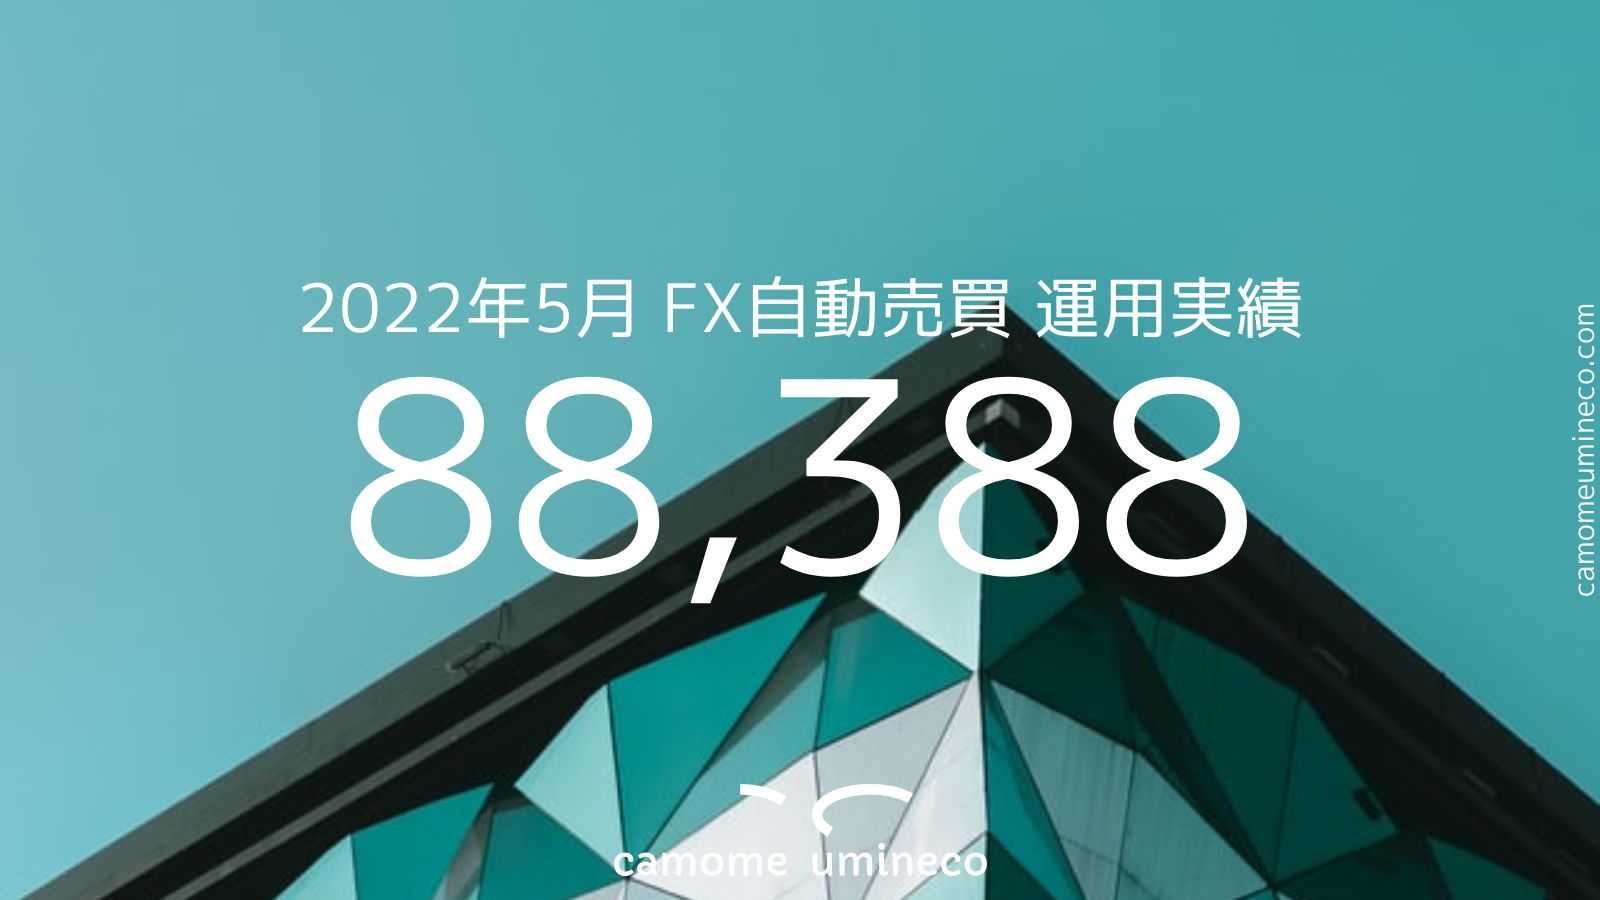 【FX自動売買】2022年5月 運用実績88,388円